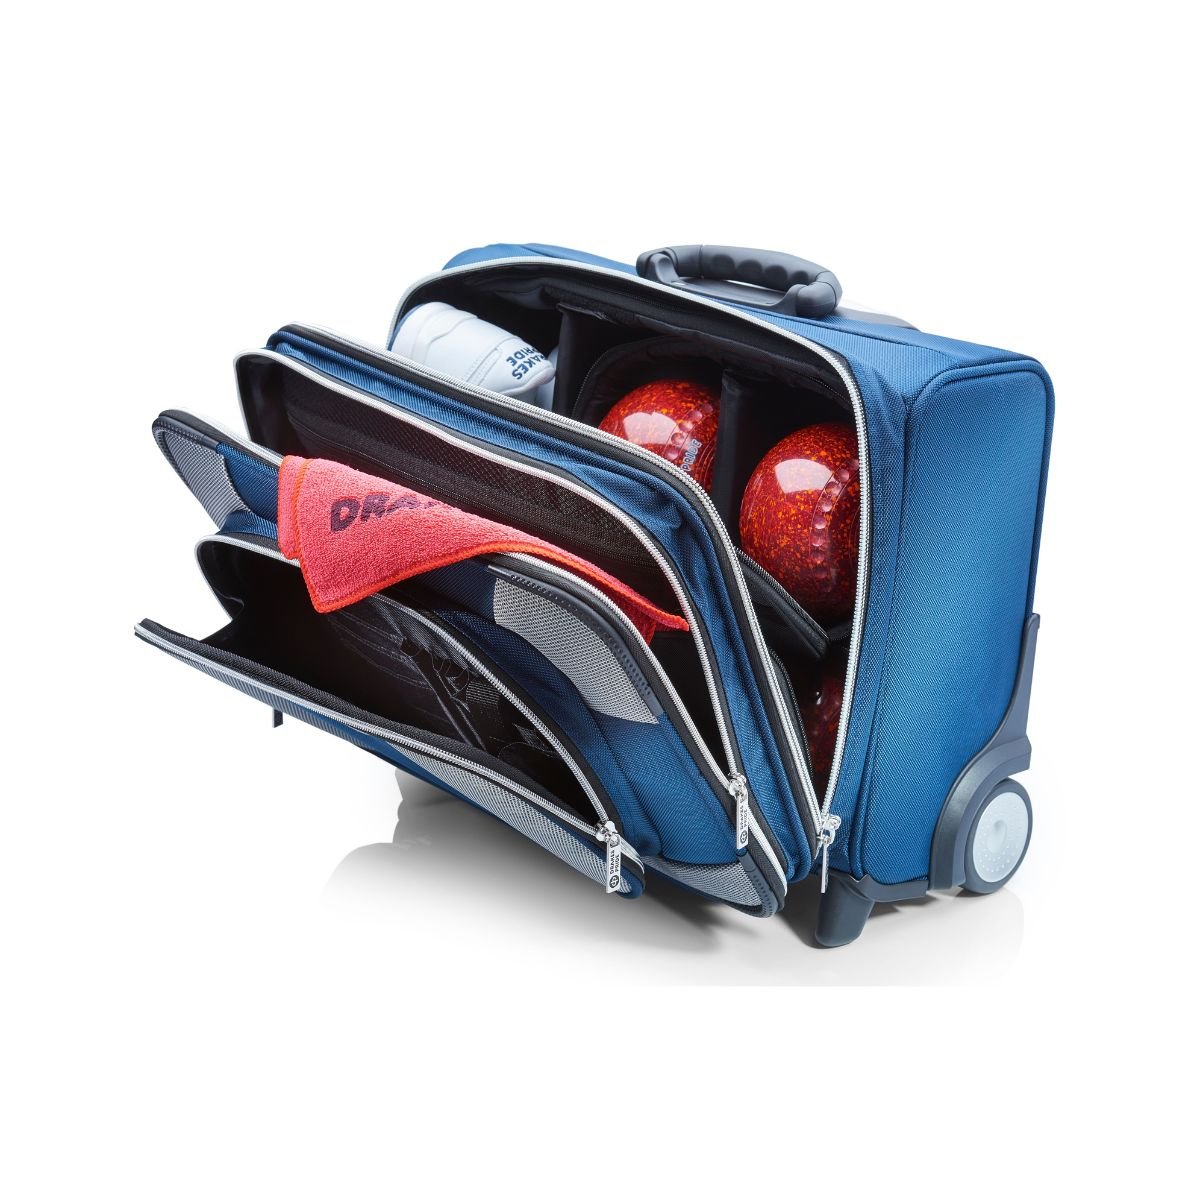 Drakes Pride Low Roller Bowls Trolley Bag - 6